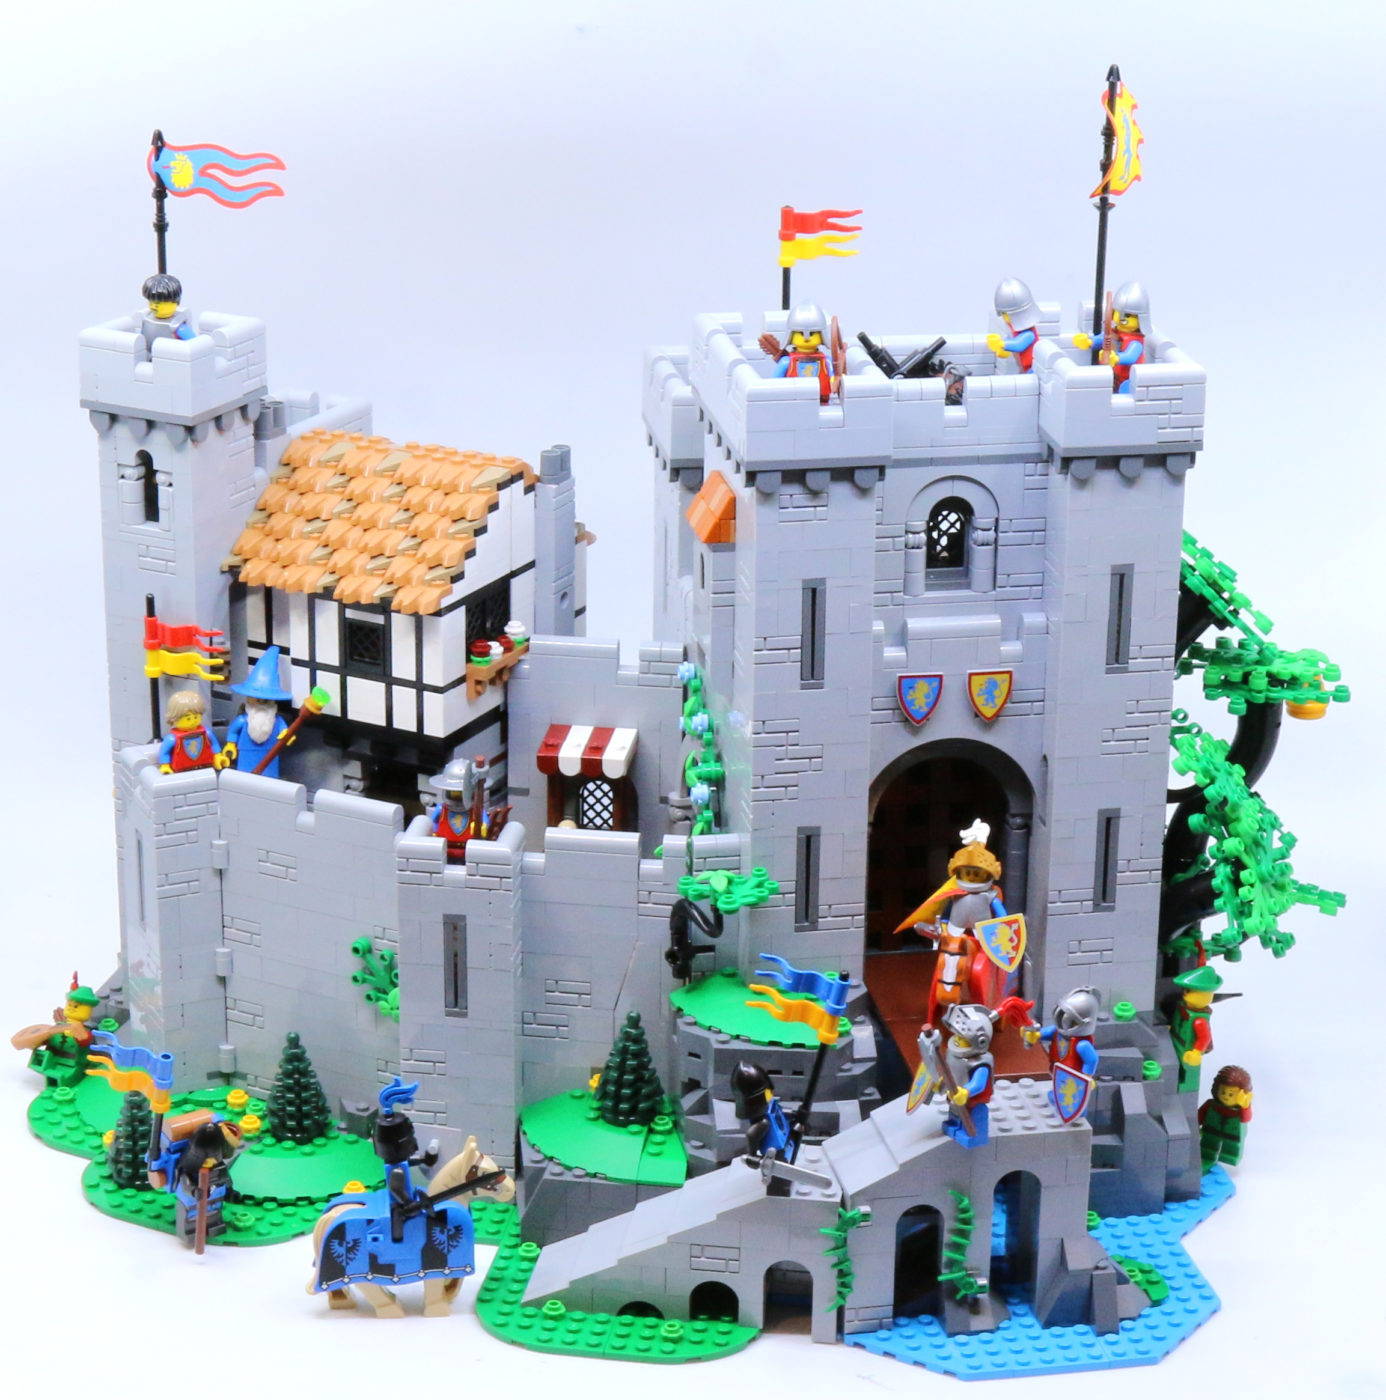 Lionknights' castle LEGO set